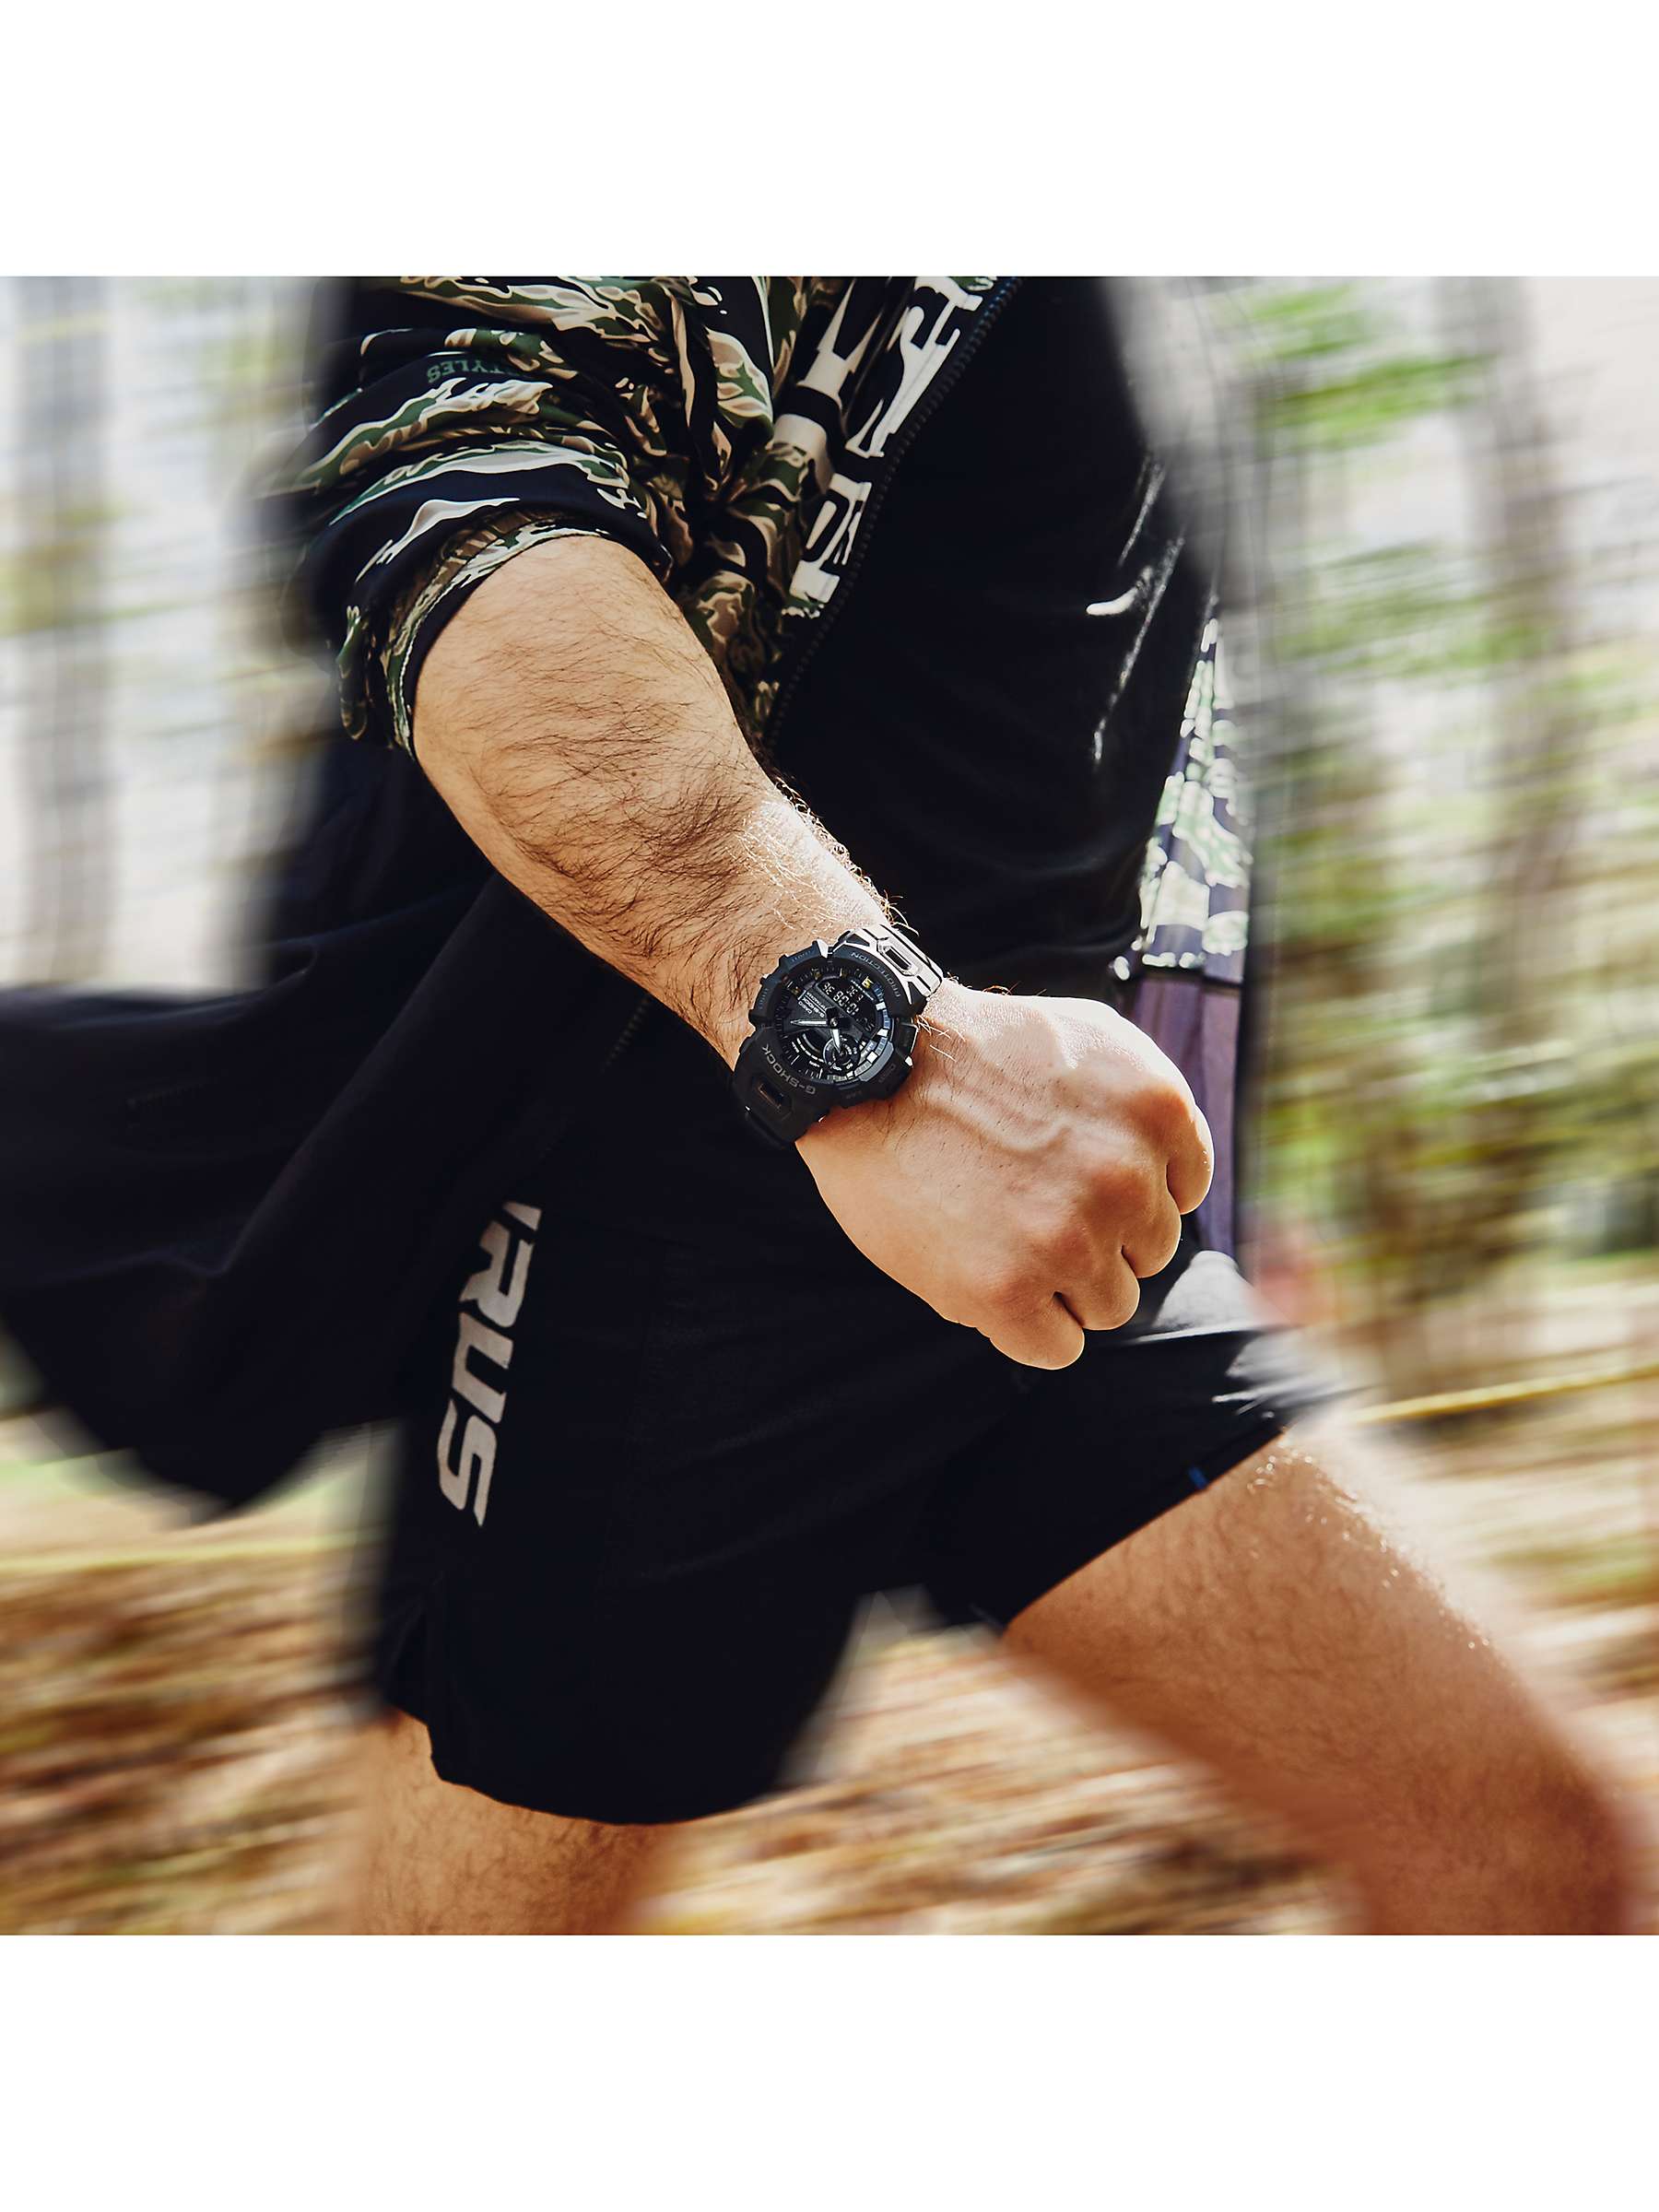 Buy Casio Men's G-Shock Resin Strap Smart Link Watch Online at johnlewis.com